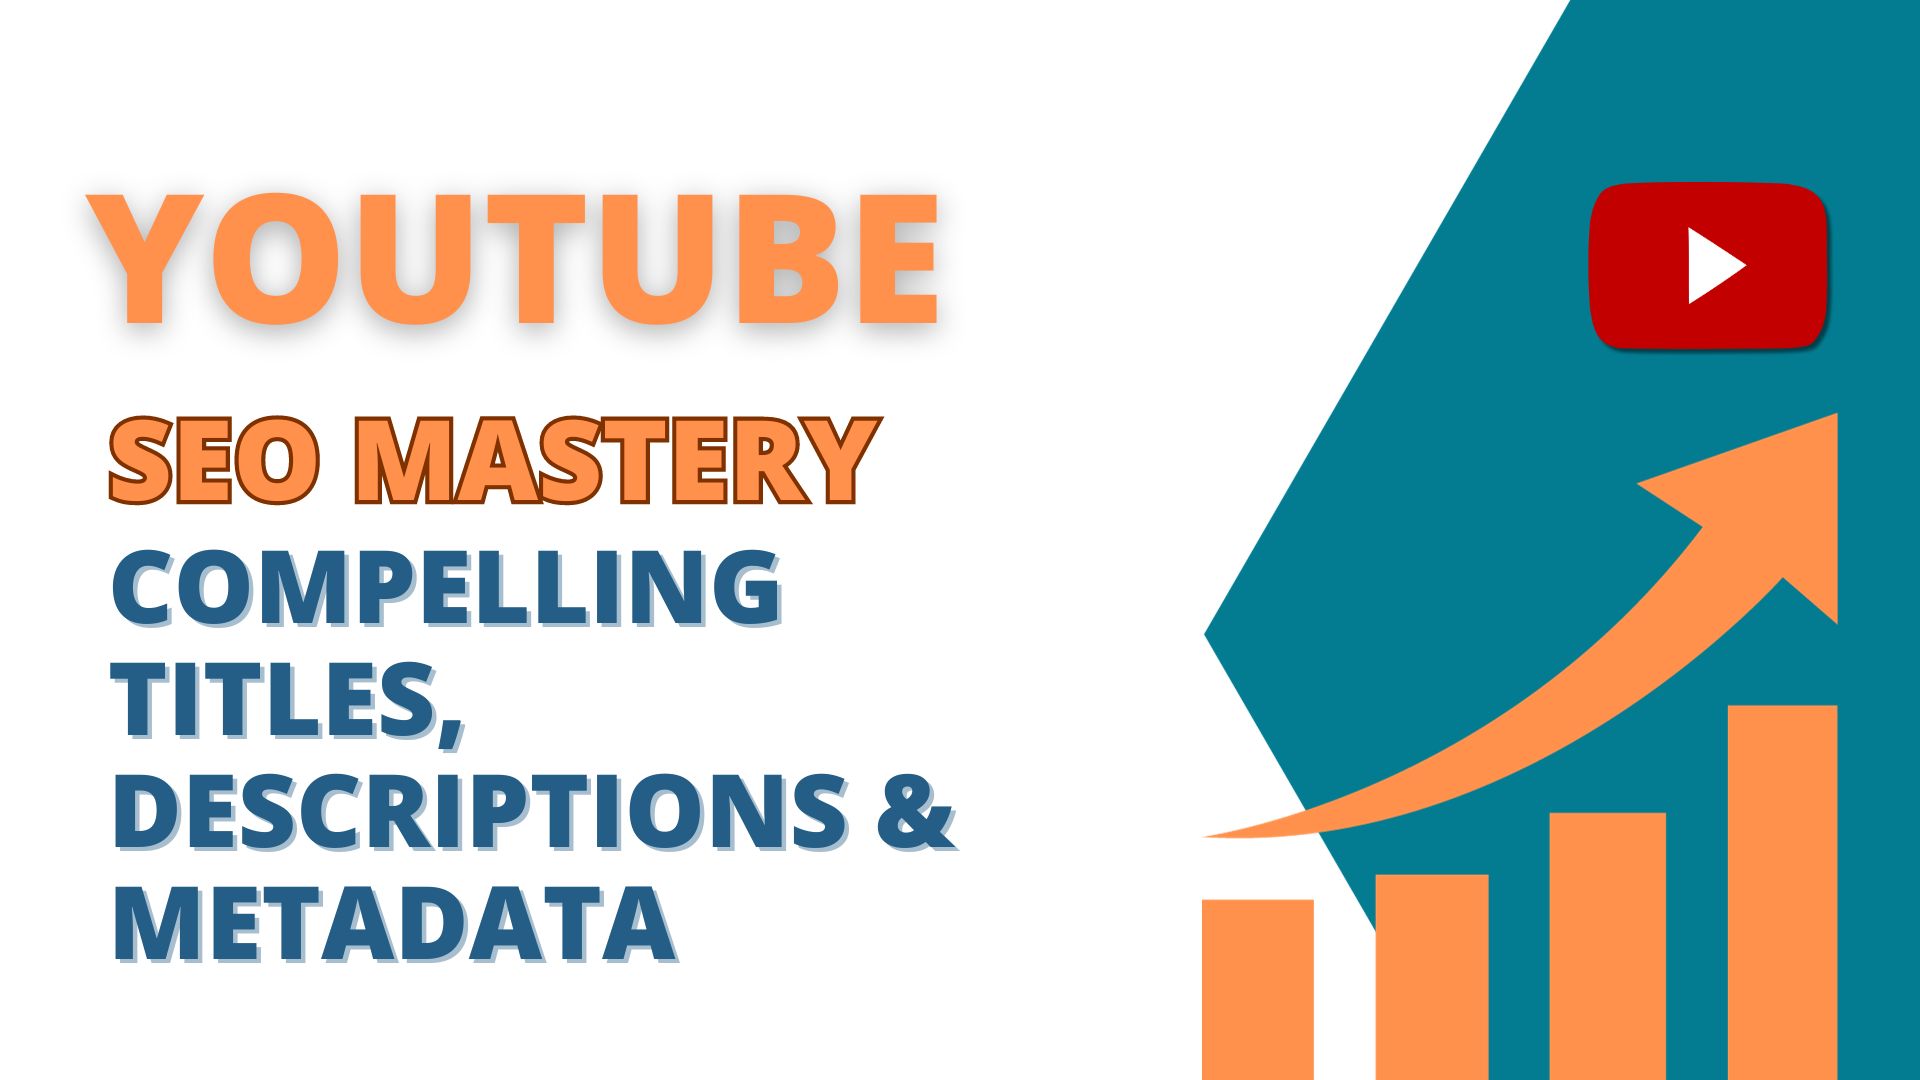 YouTube SEO Mastery - Compelling Titles, Descriptions & Metadata